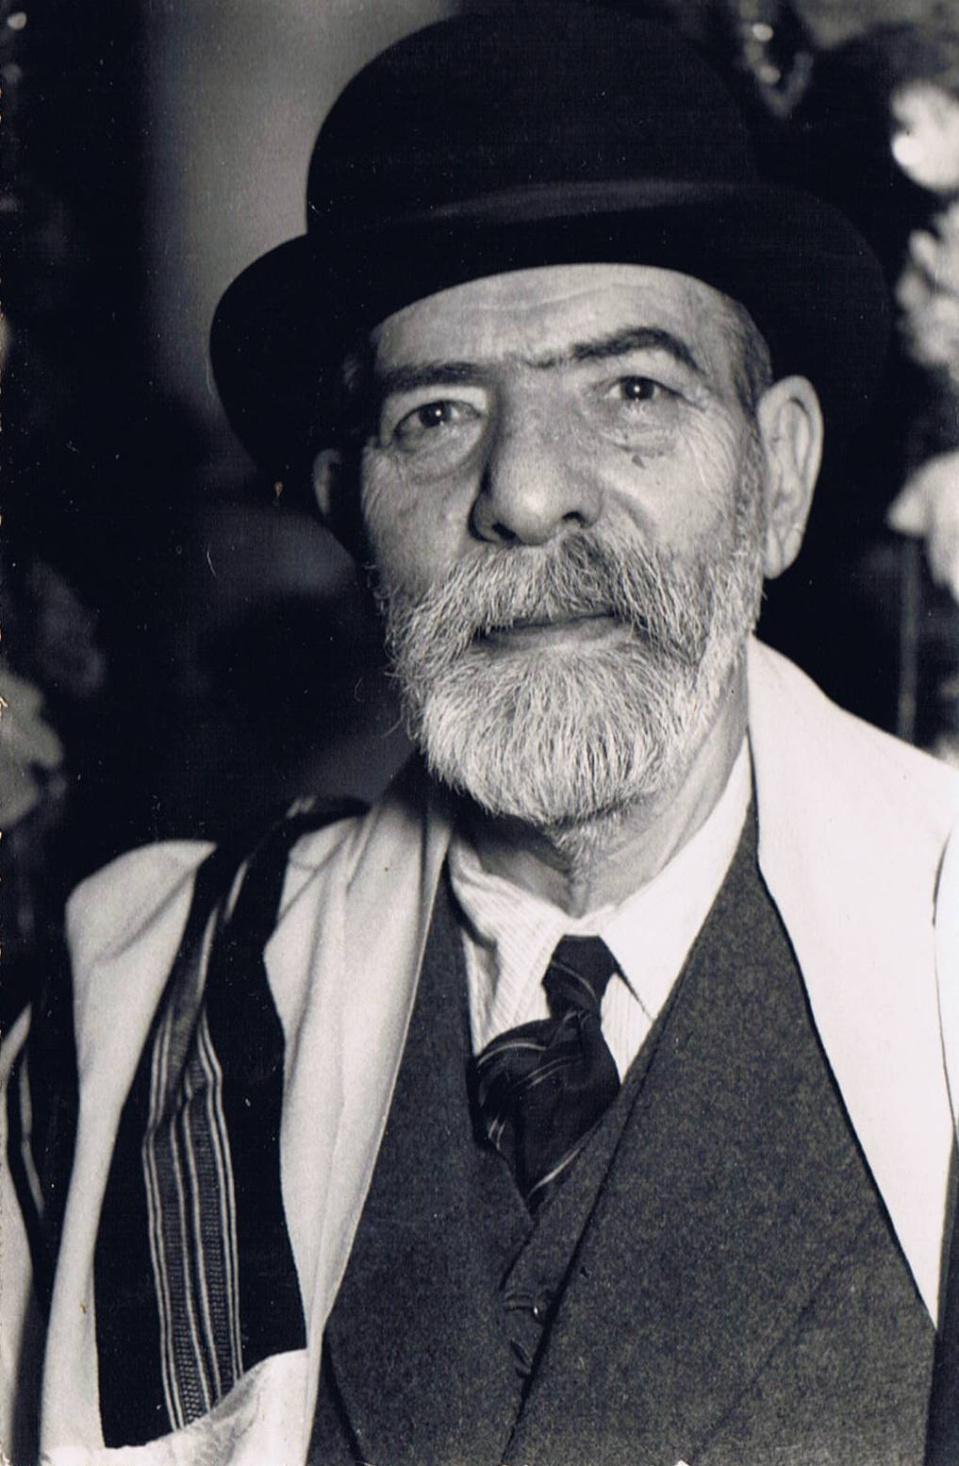 Rabbi Sidi Fredj Halimi